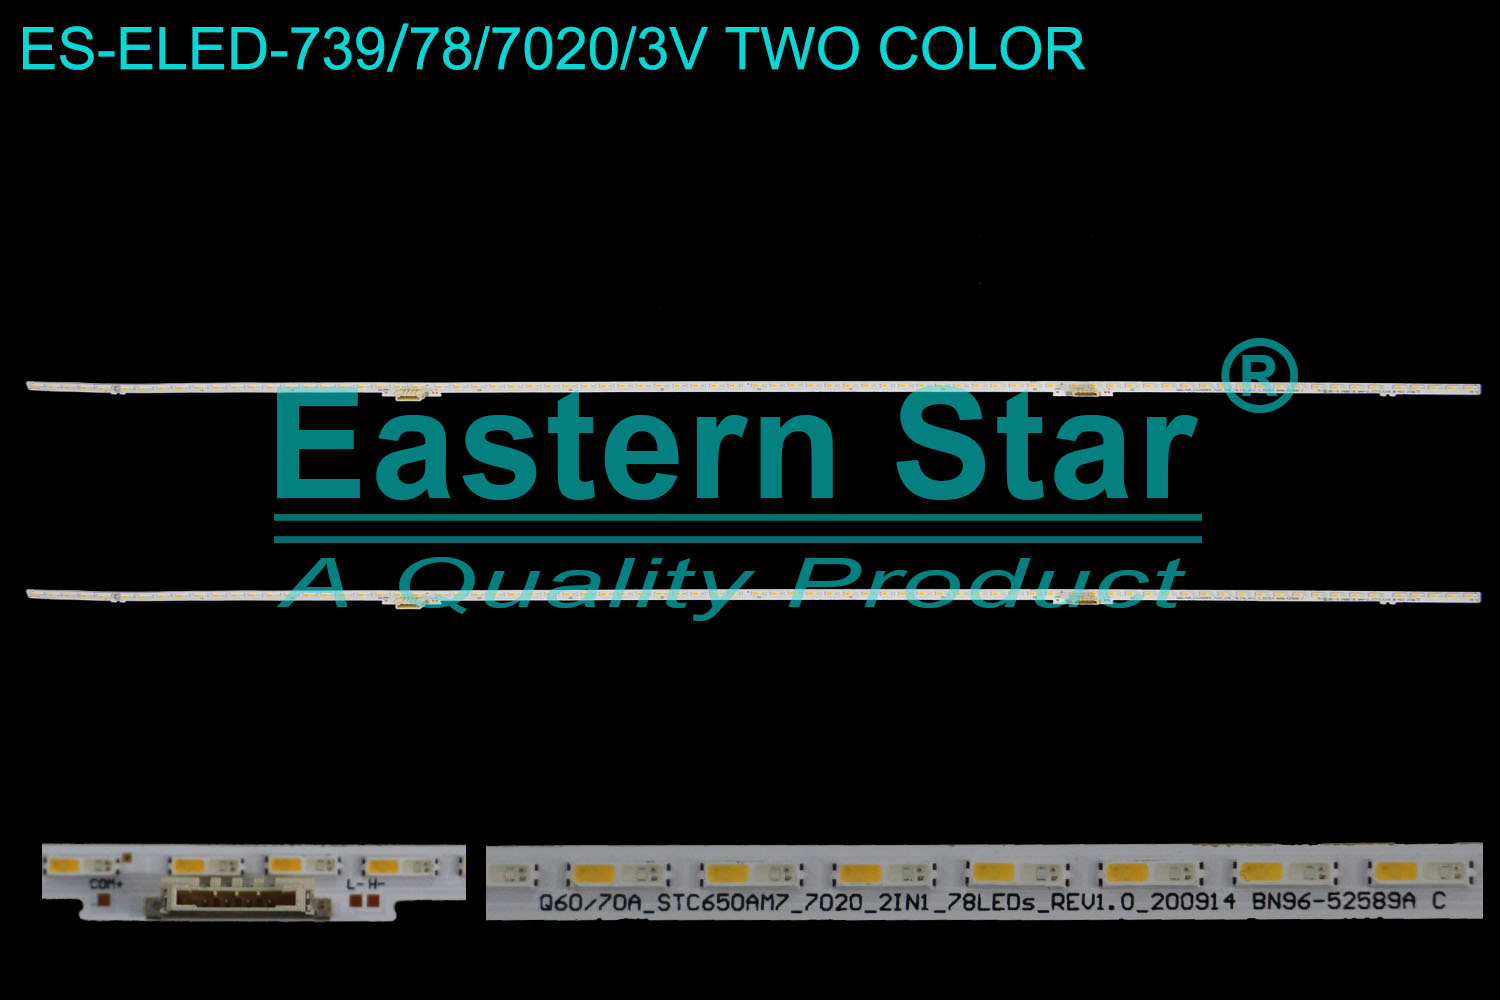 ES-ELED-739=ES-ELED-619 ELED/EDGE TV backlight use for 65'' Samsung QN65LS03ADFXZA  52589A C  Q60/70A_STC650AM7_7020_2IN1_78LEDs_REV1.0_200914  LED STRIPS(2)